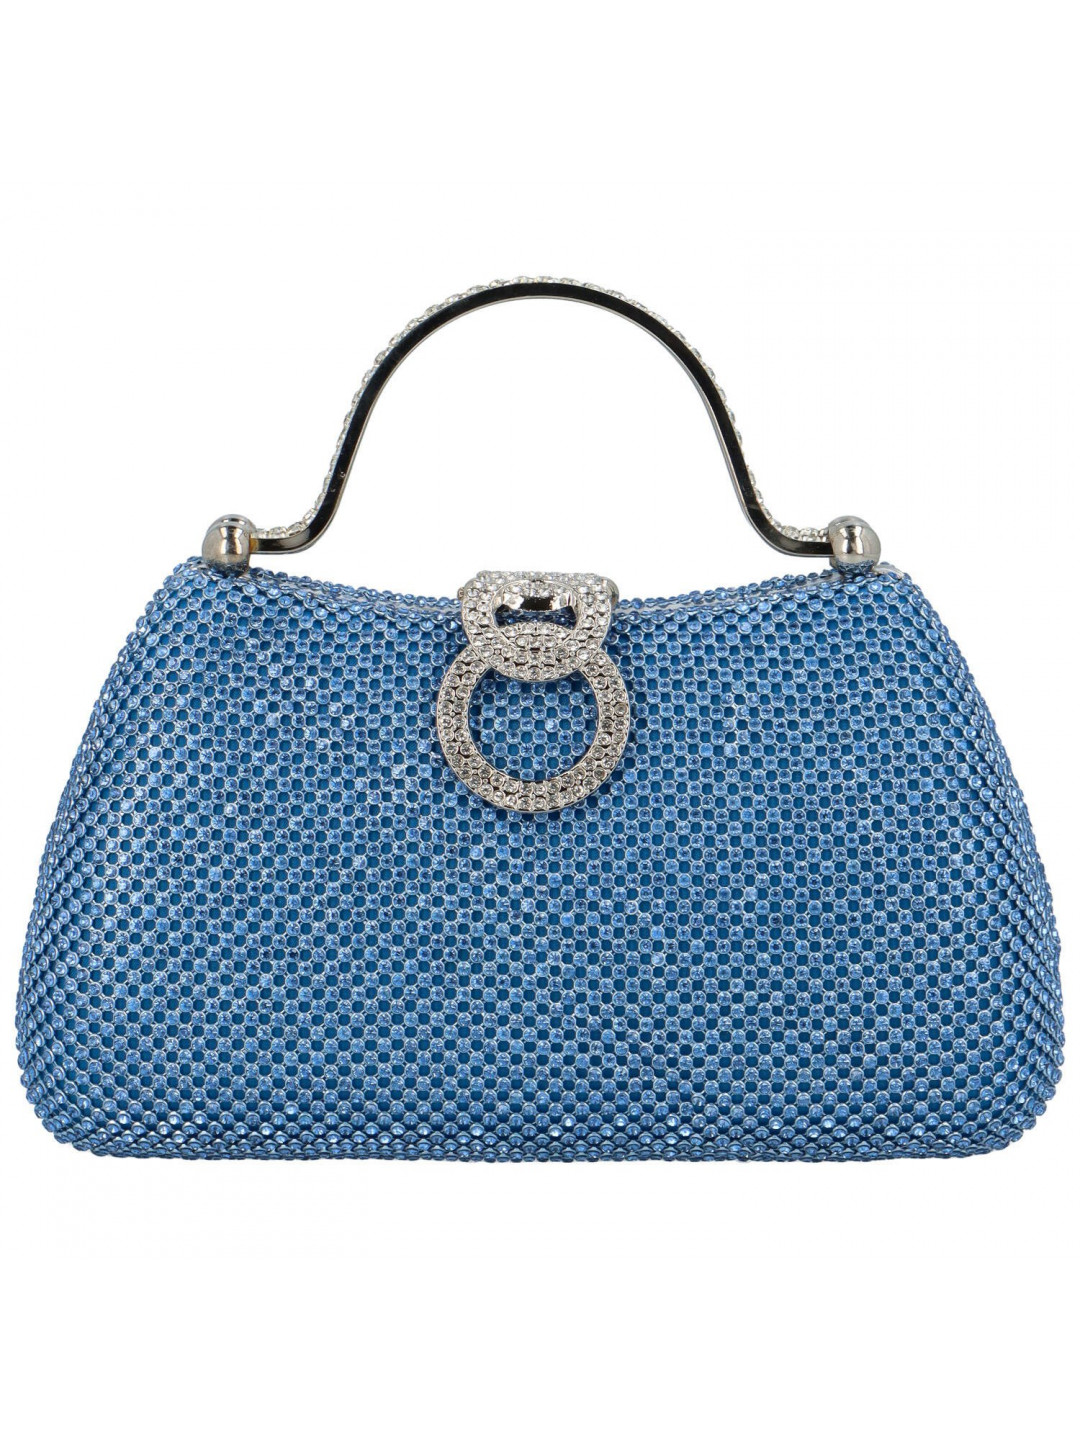 Luxusní dámská kabelka do ruky MOON Keisha modrá